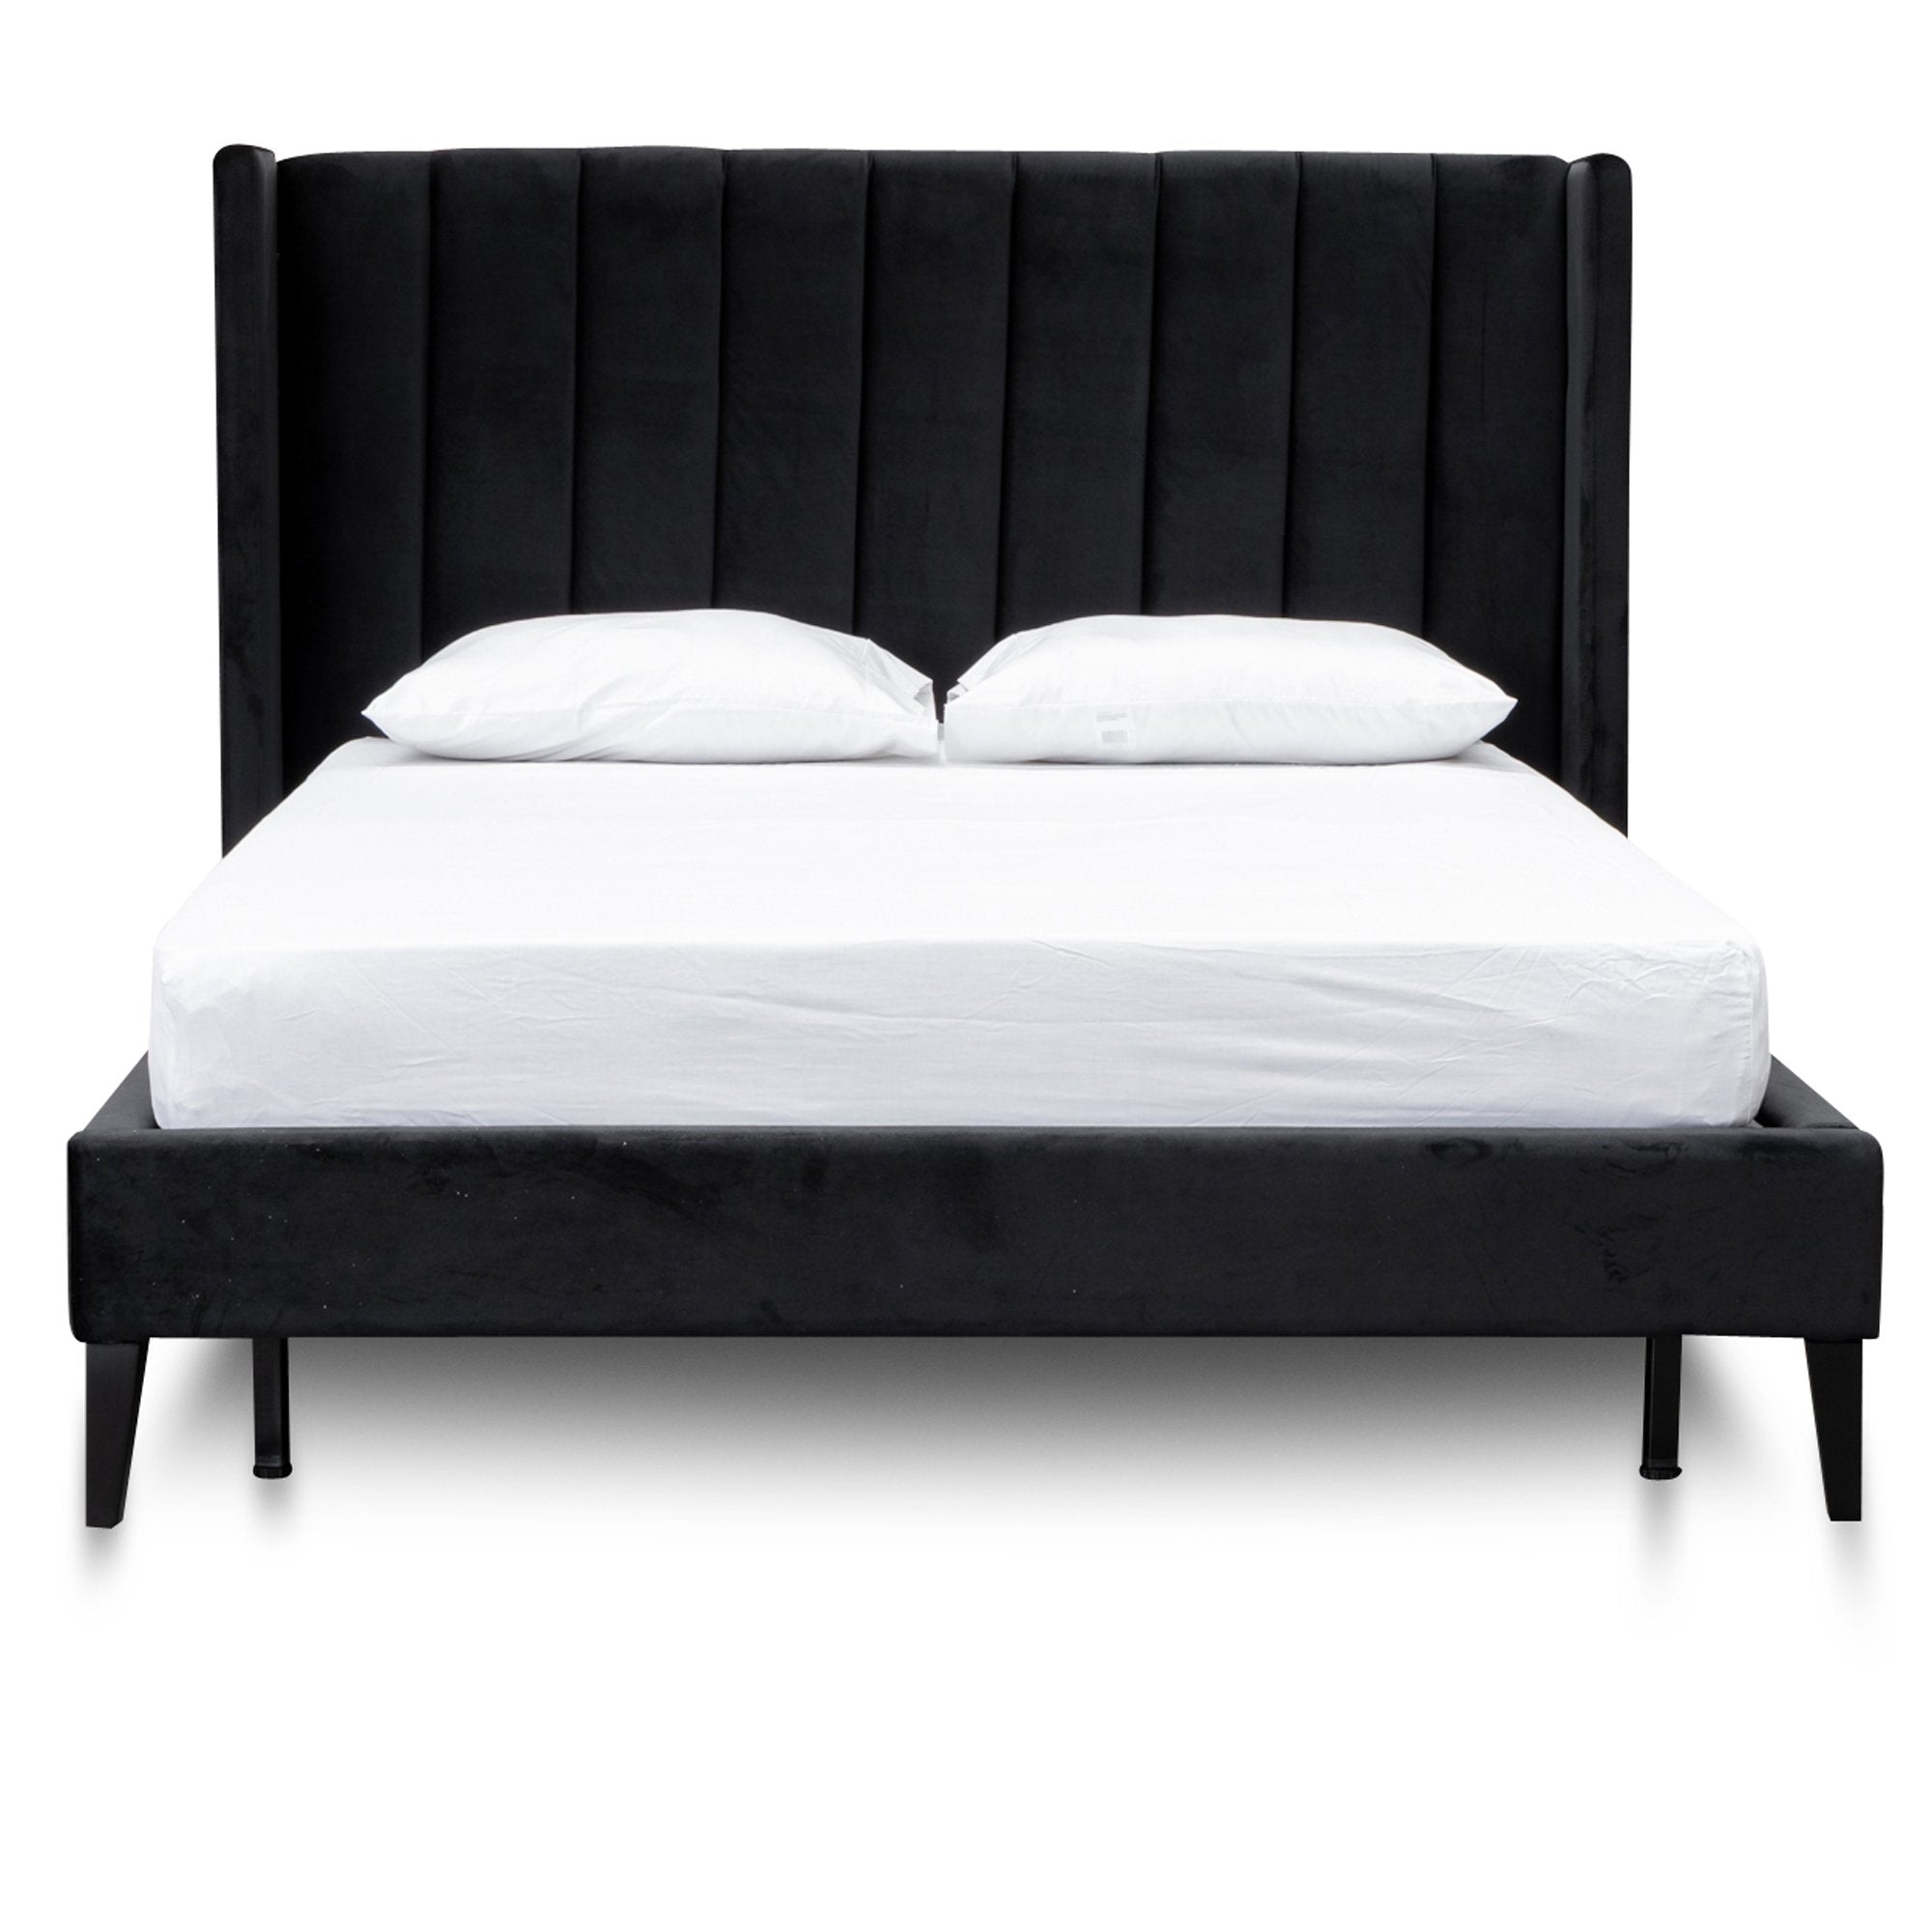 Hillsdale Velvet Queen Bed Frame - Black | Interior Secrets